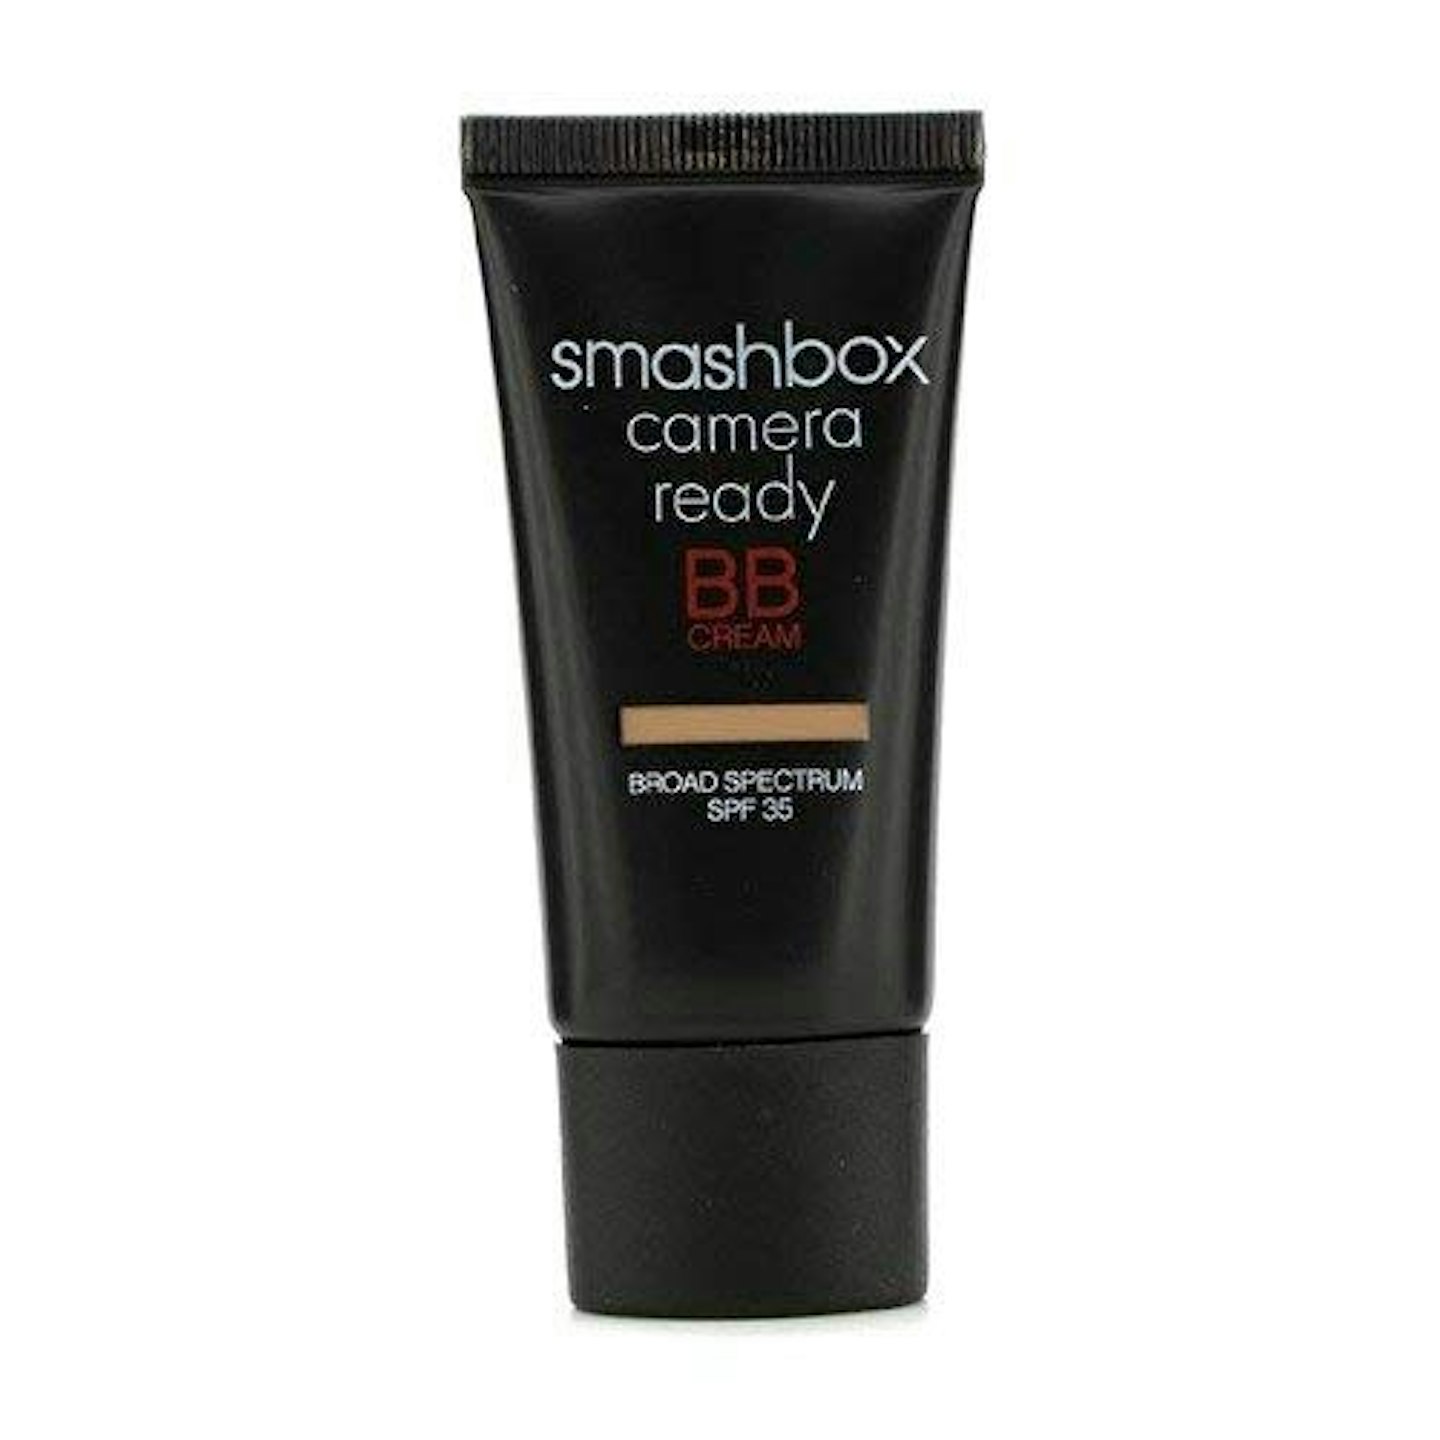 Smashbox Camera Ready BB Cream Broad Spectrum